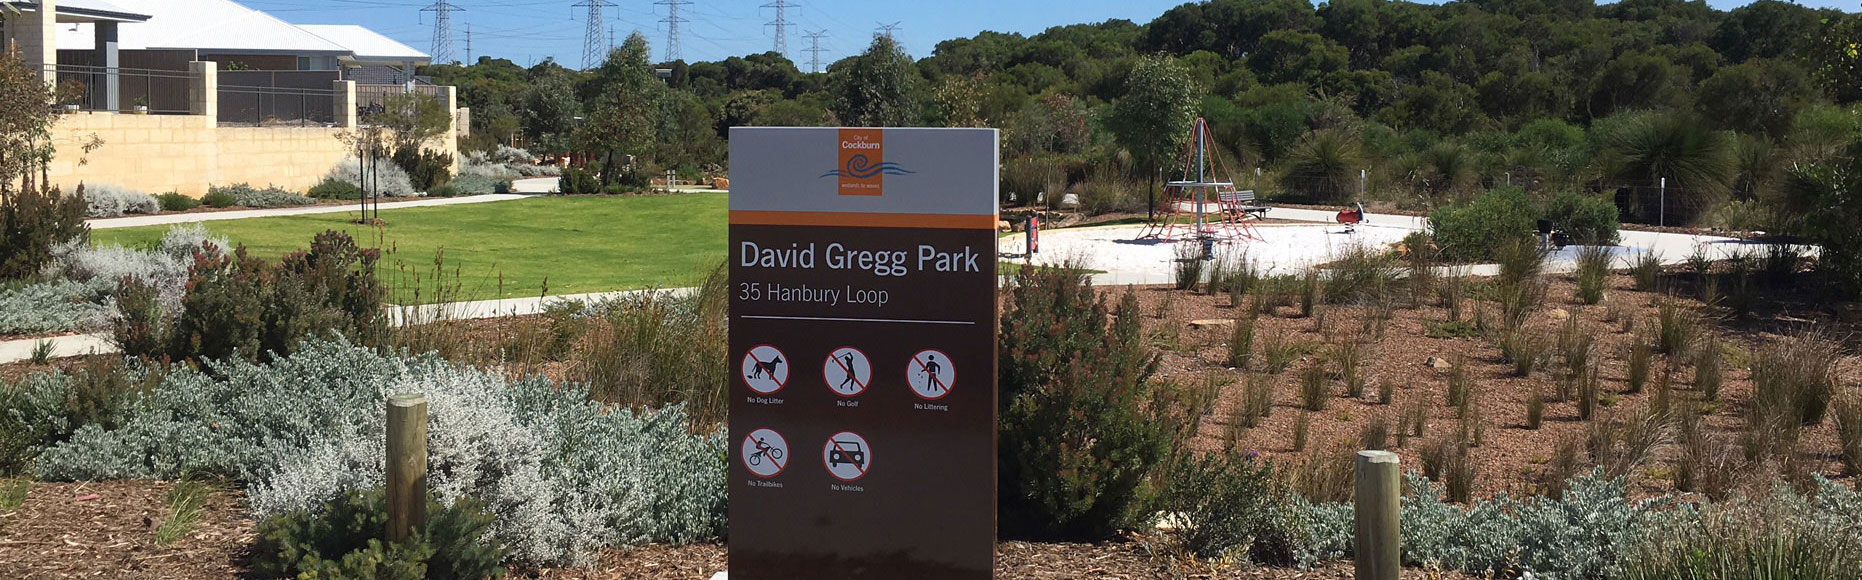 Wentworth West park officially named David Gregg Park